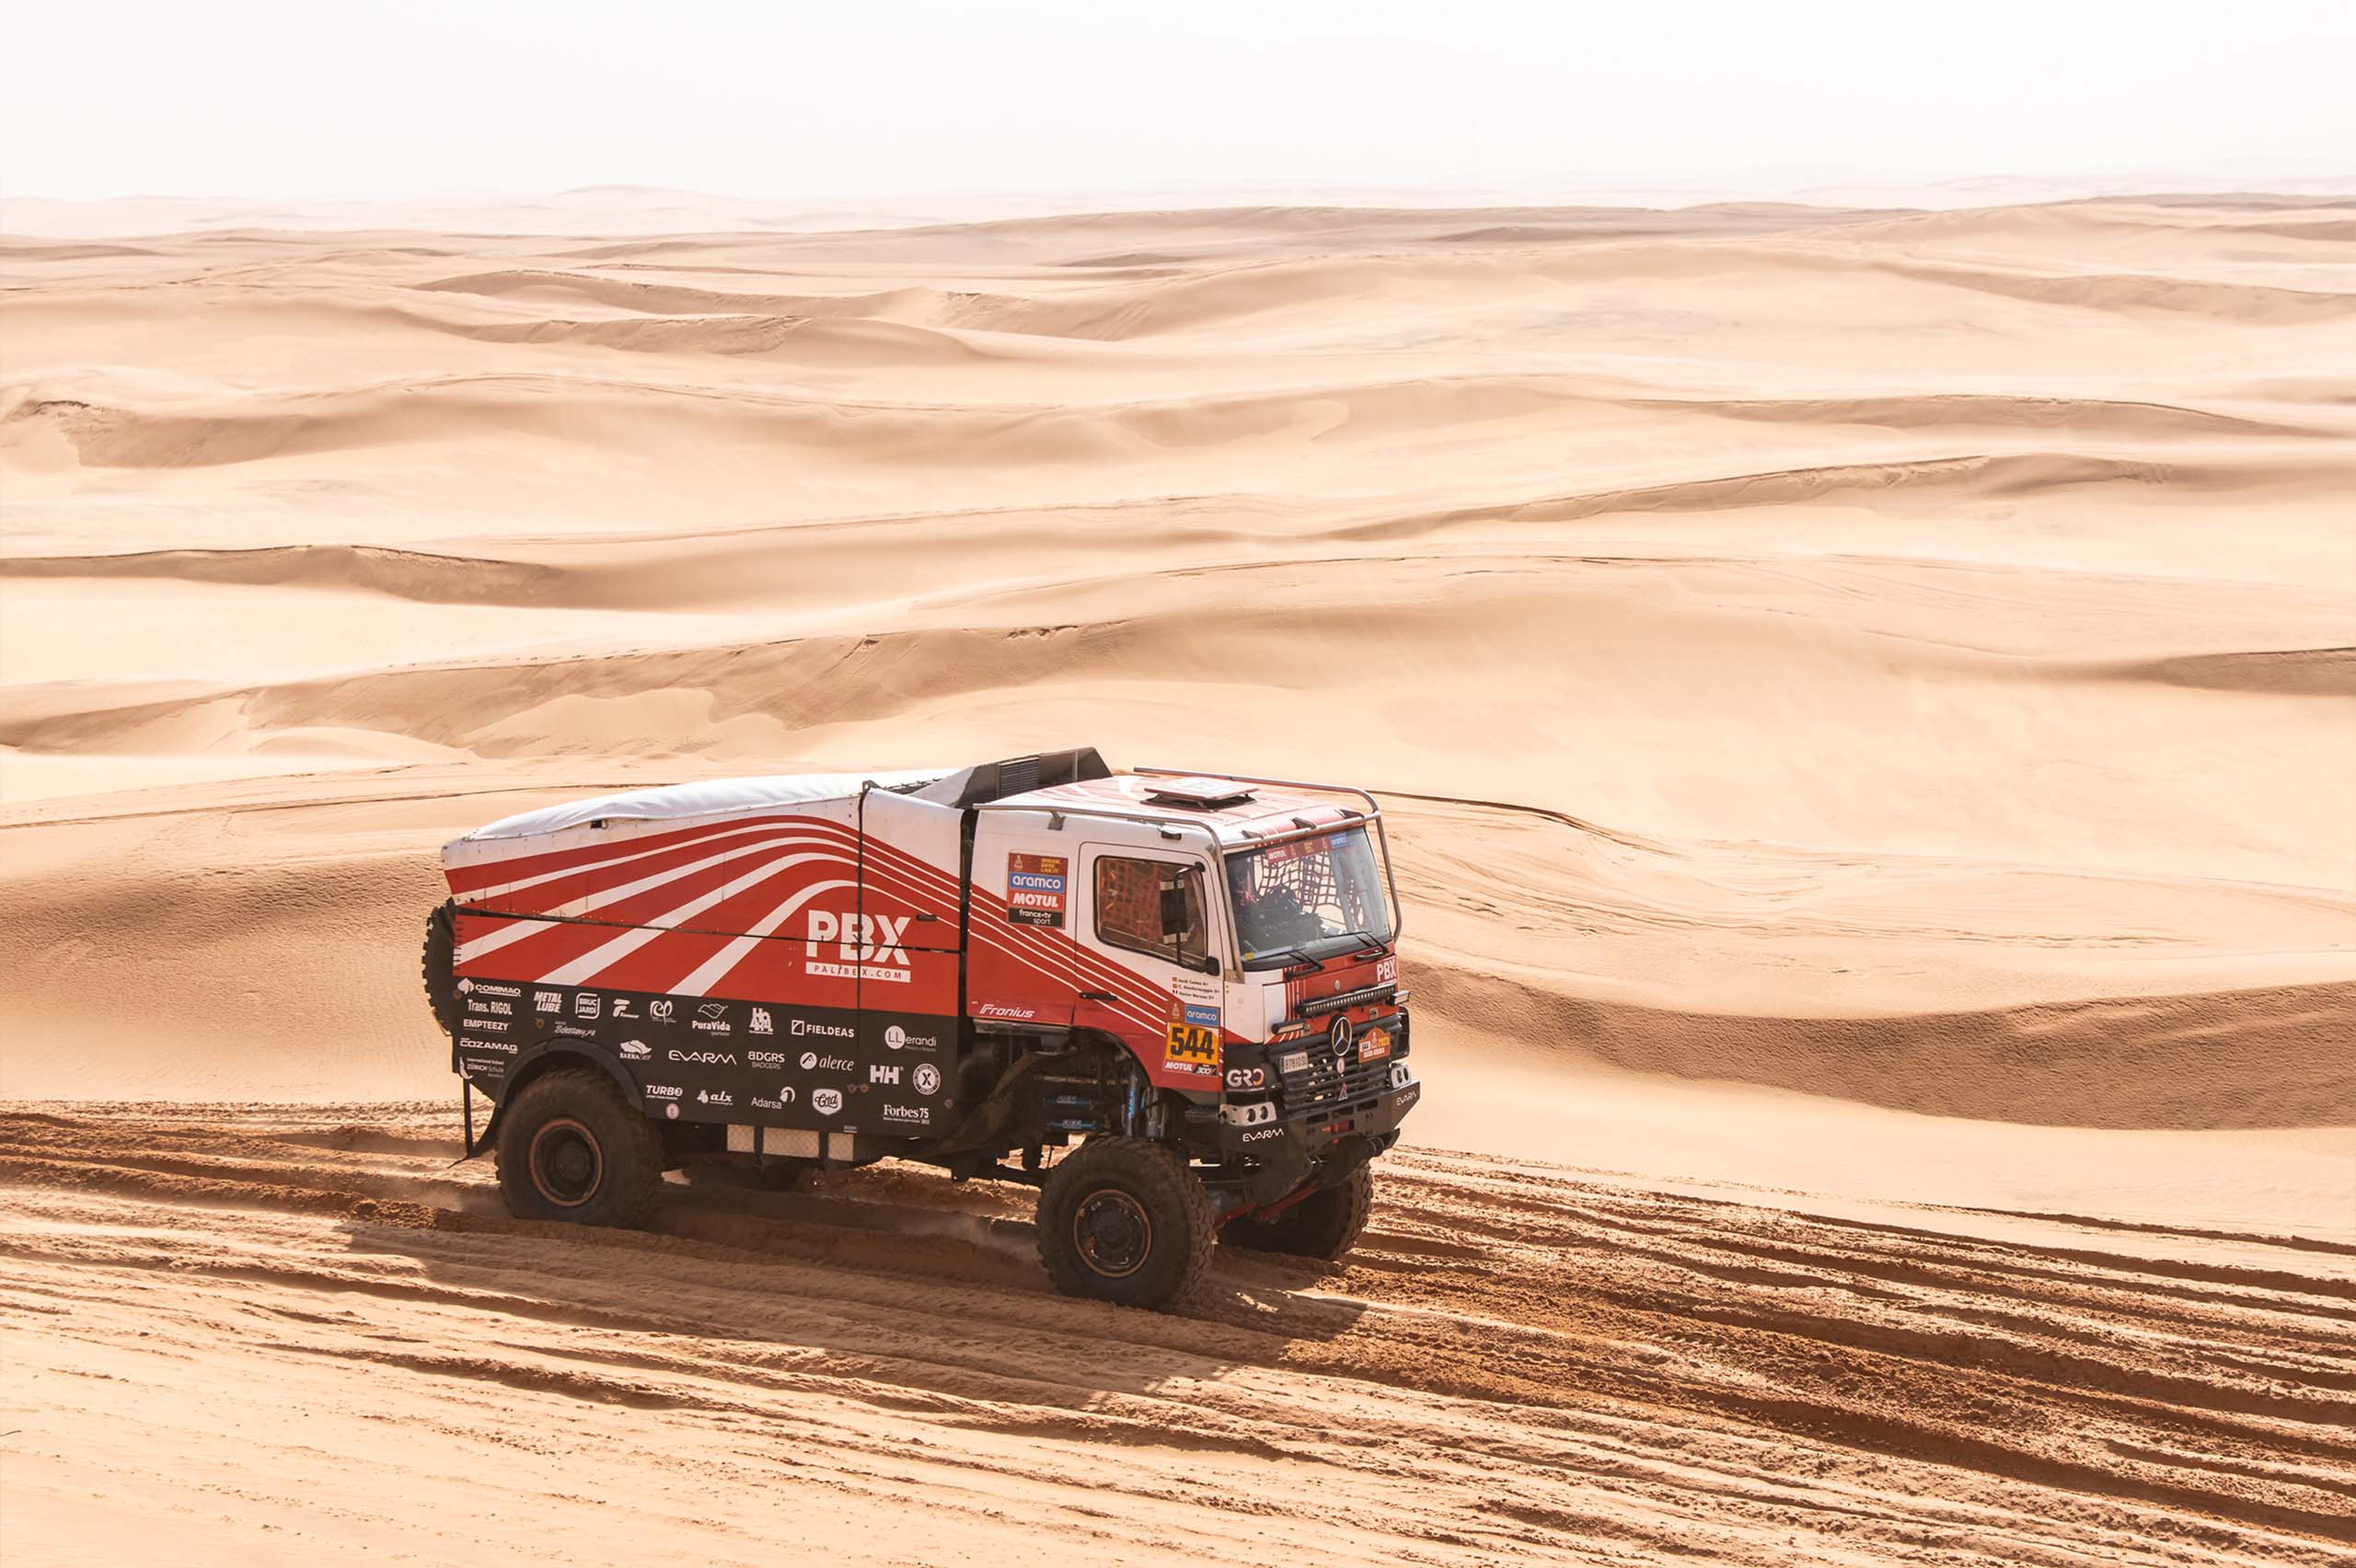 Camiones todoterreno - camion dakar - camion dunas desierto - pbx dakar team - palibex